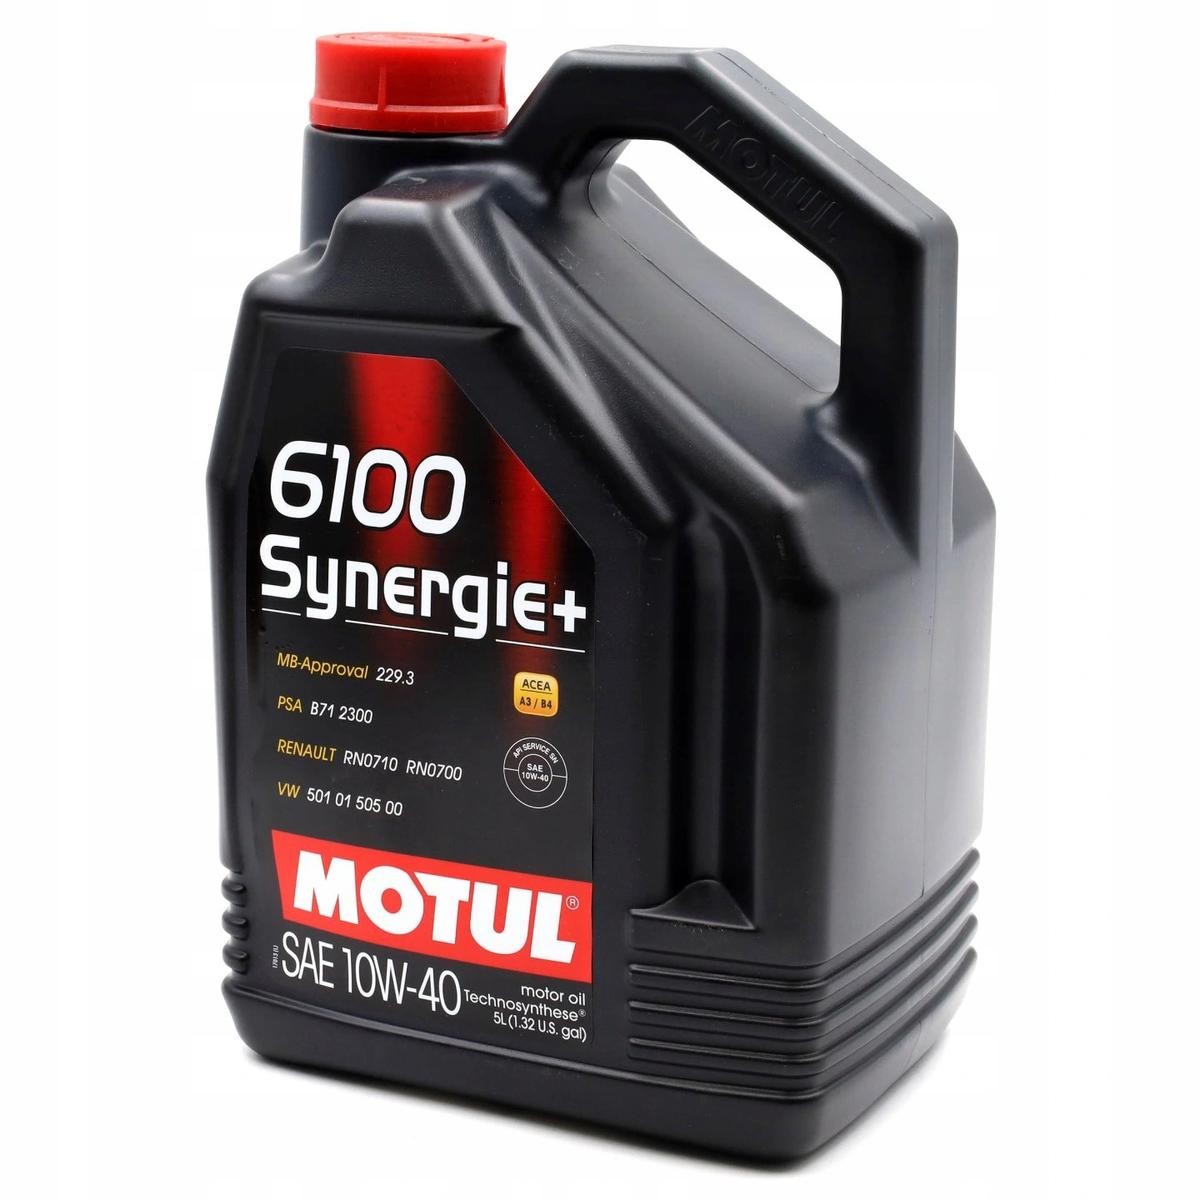 Renault Motoröl MOTUL 16100 zum günstigen Preis